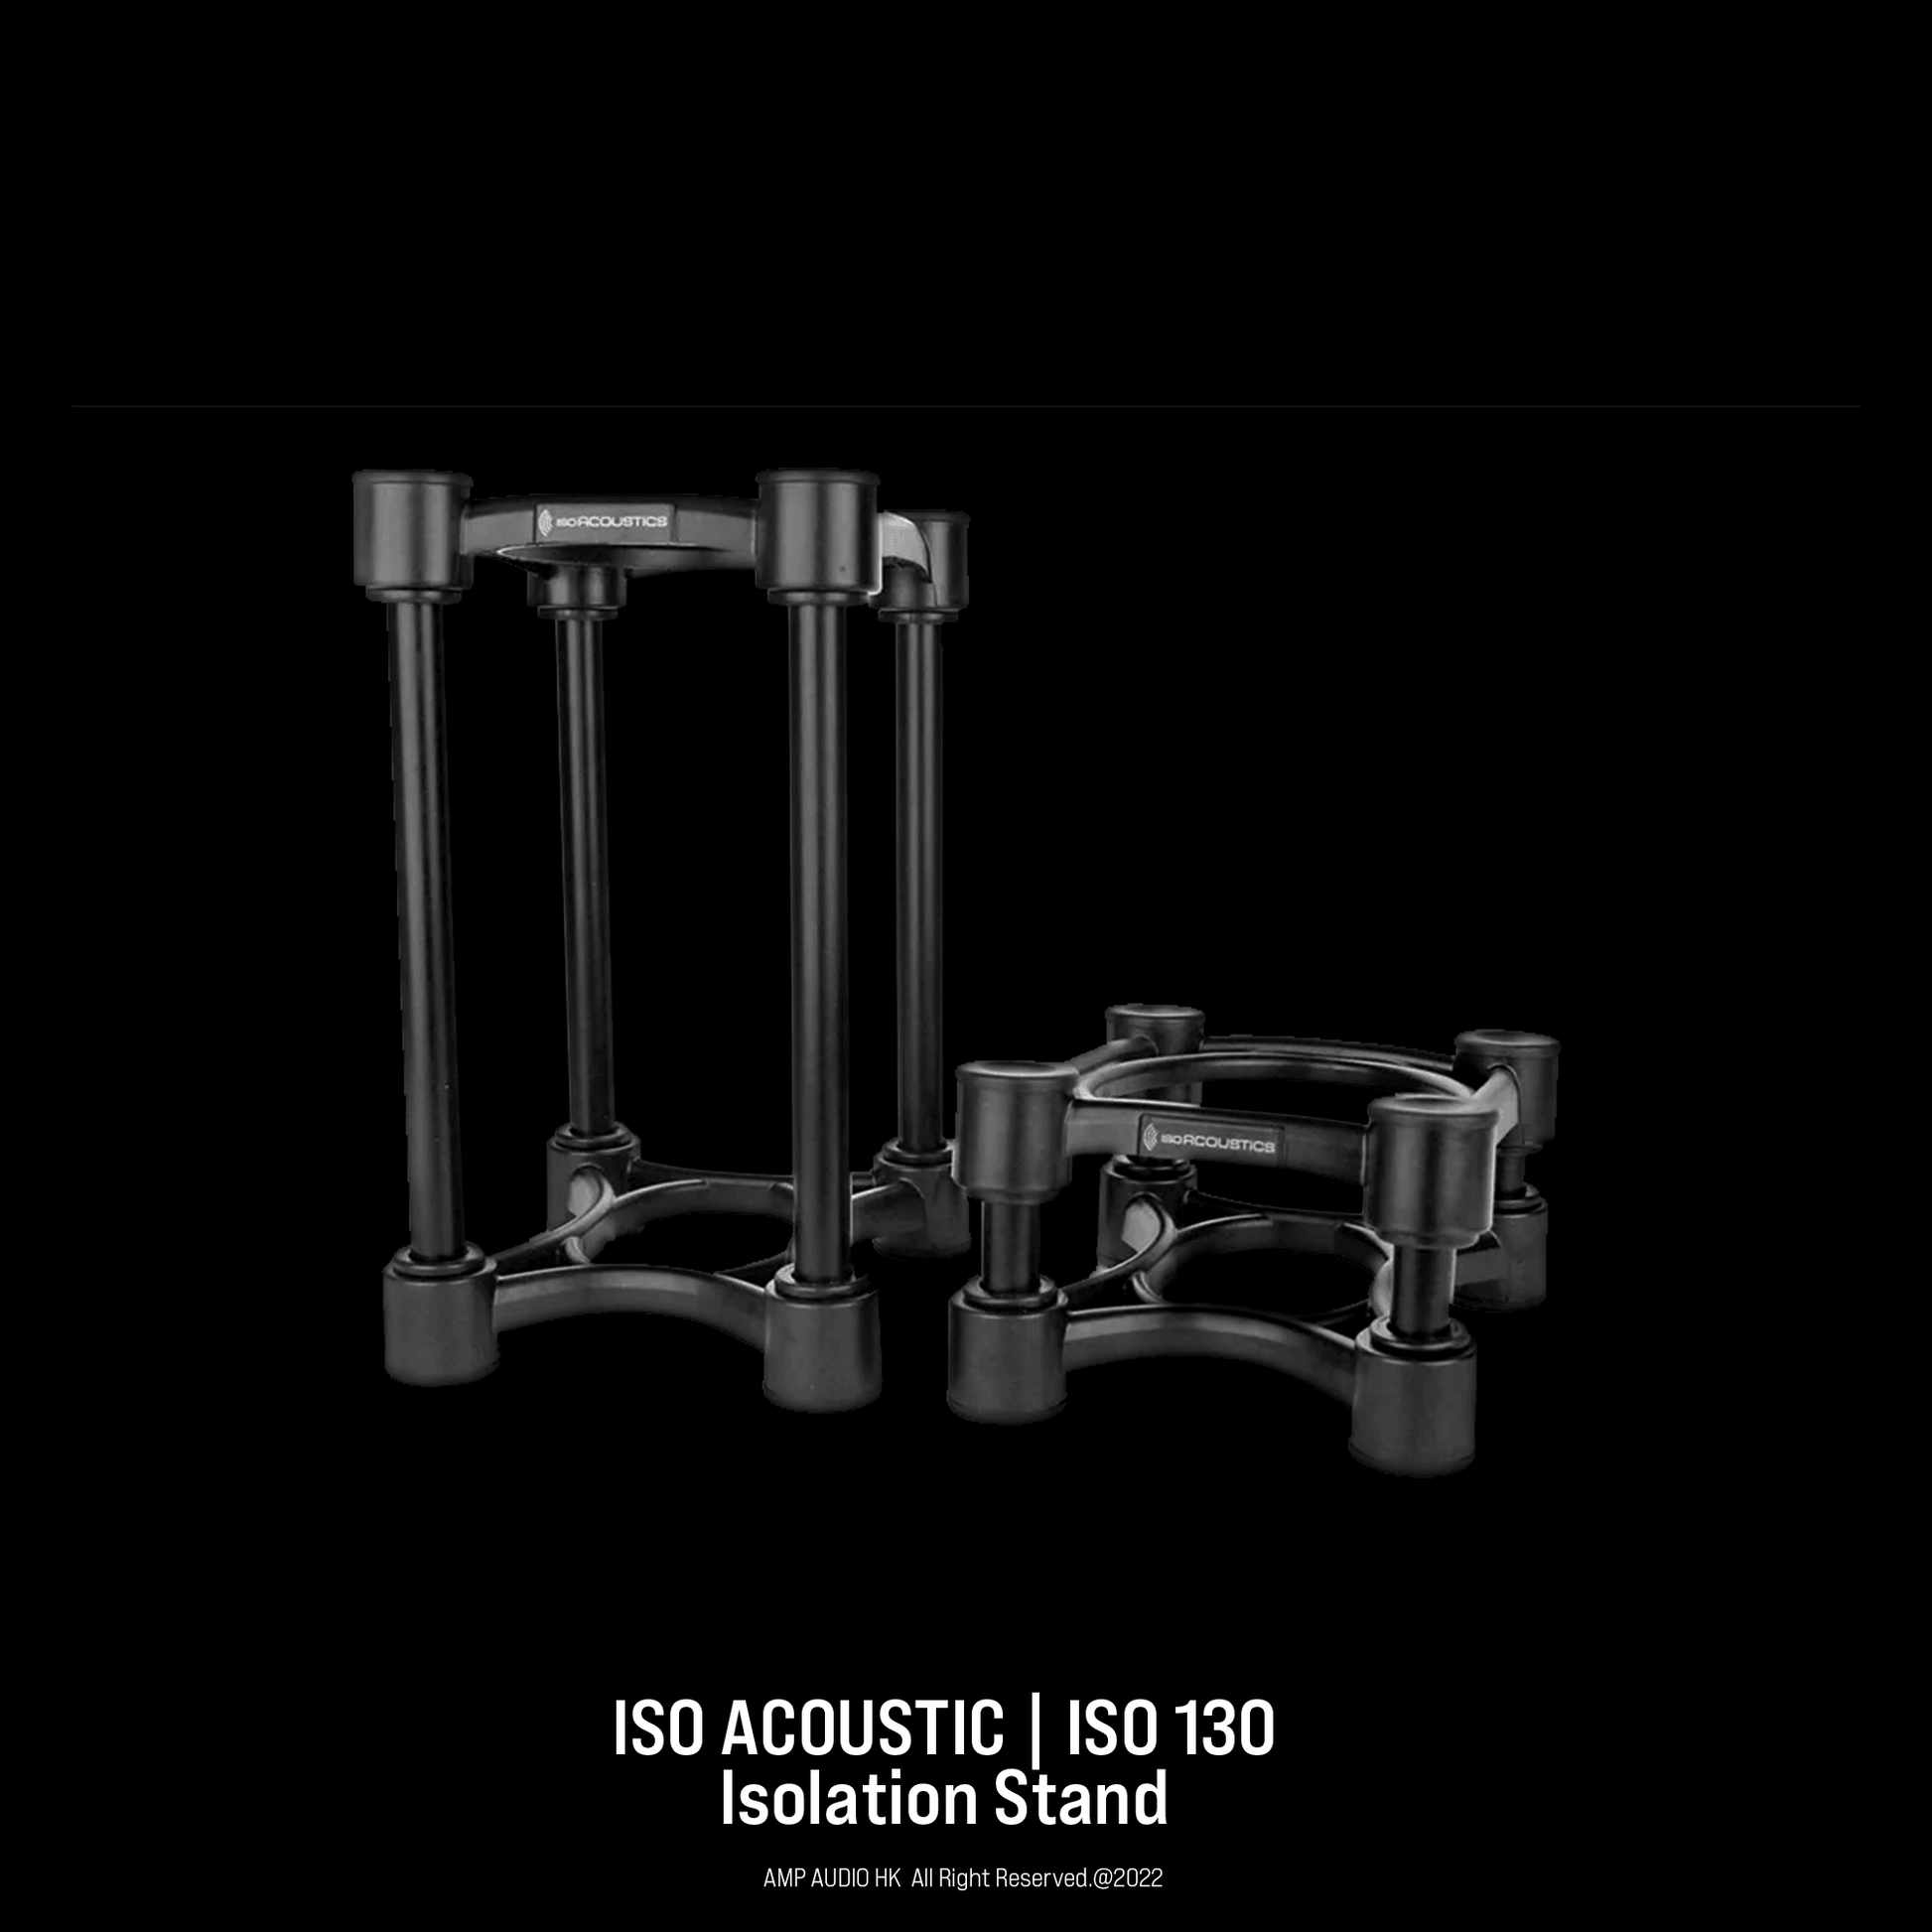 Iso Acoustic | ISO 130 - AMP AUDIO